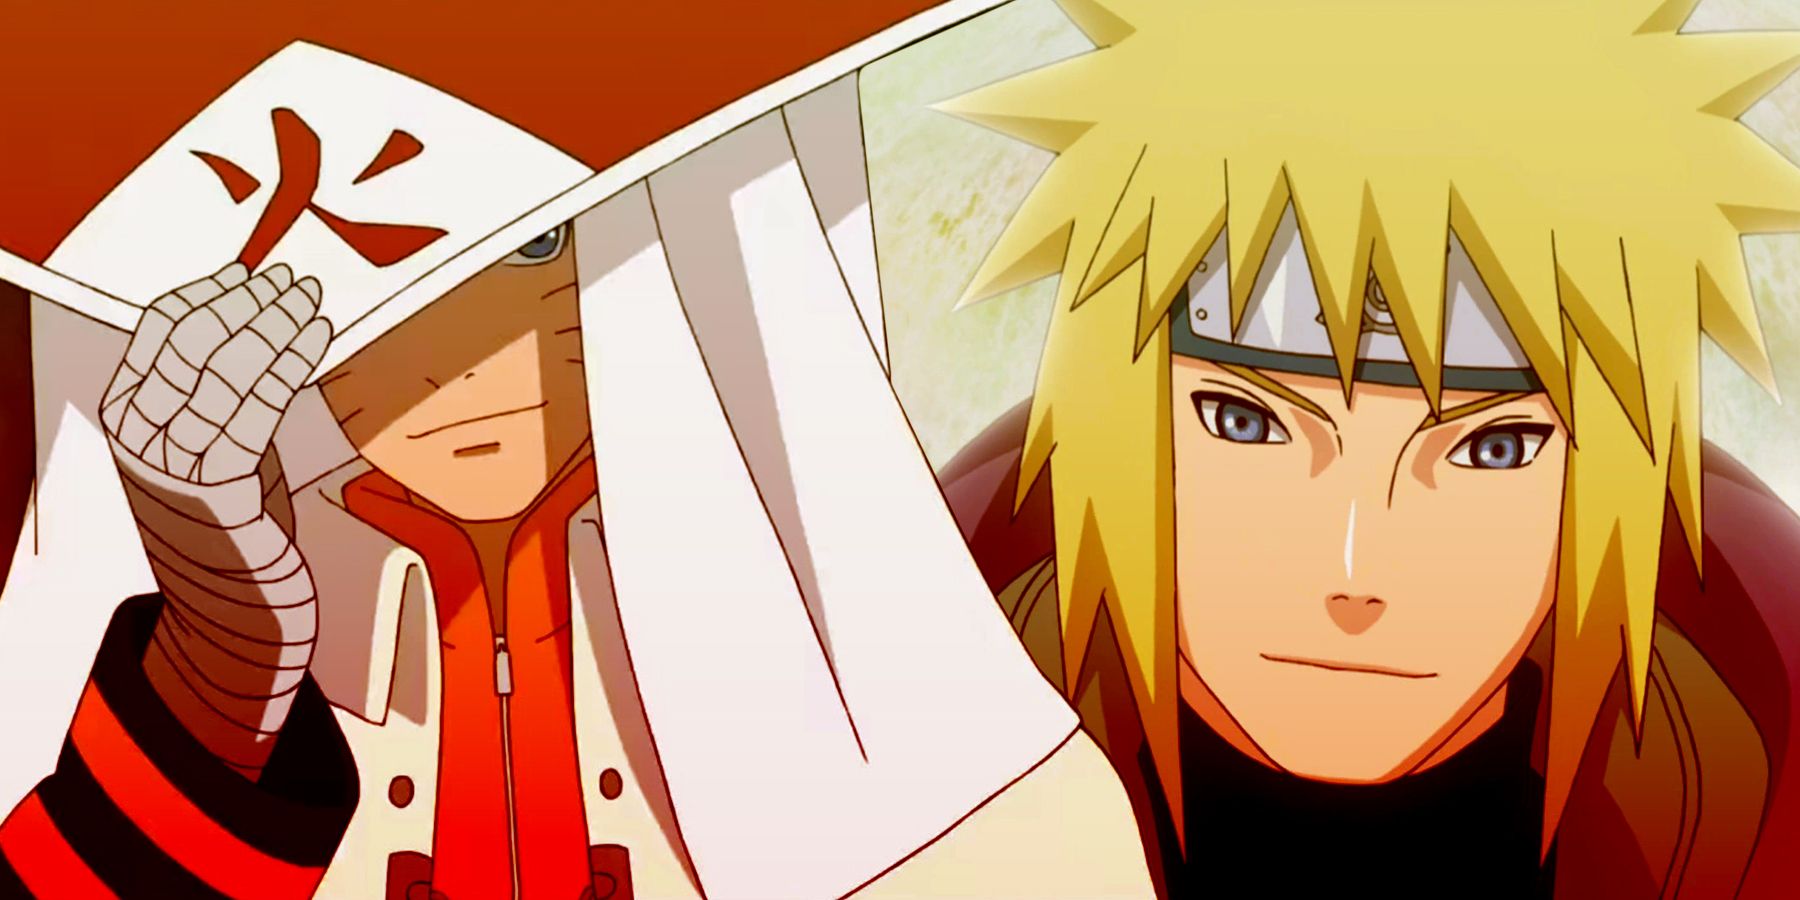 Despite Becoming the 7th Hokage, Naruto Failed to Keep His One